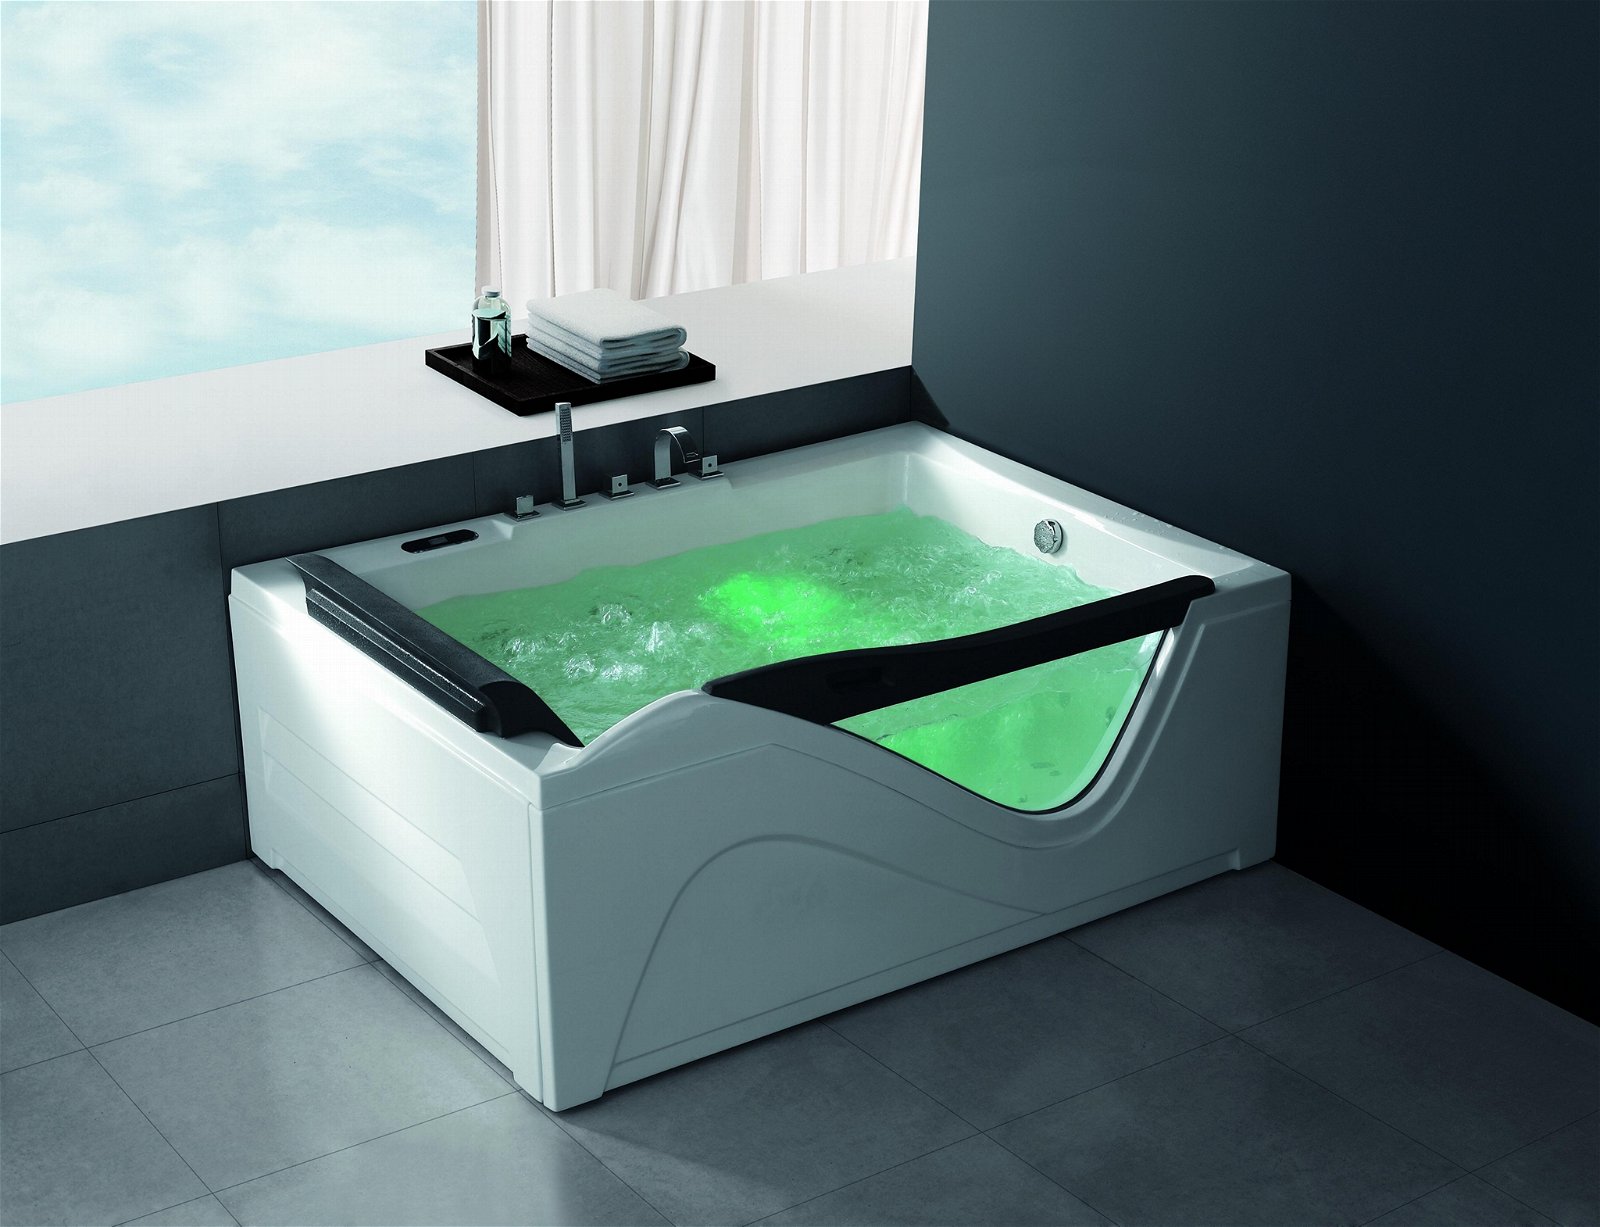 Alanbro high quality freestanding luxury whirlpool massage glass window bathtub